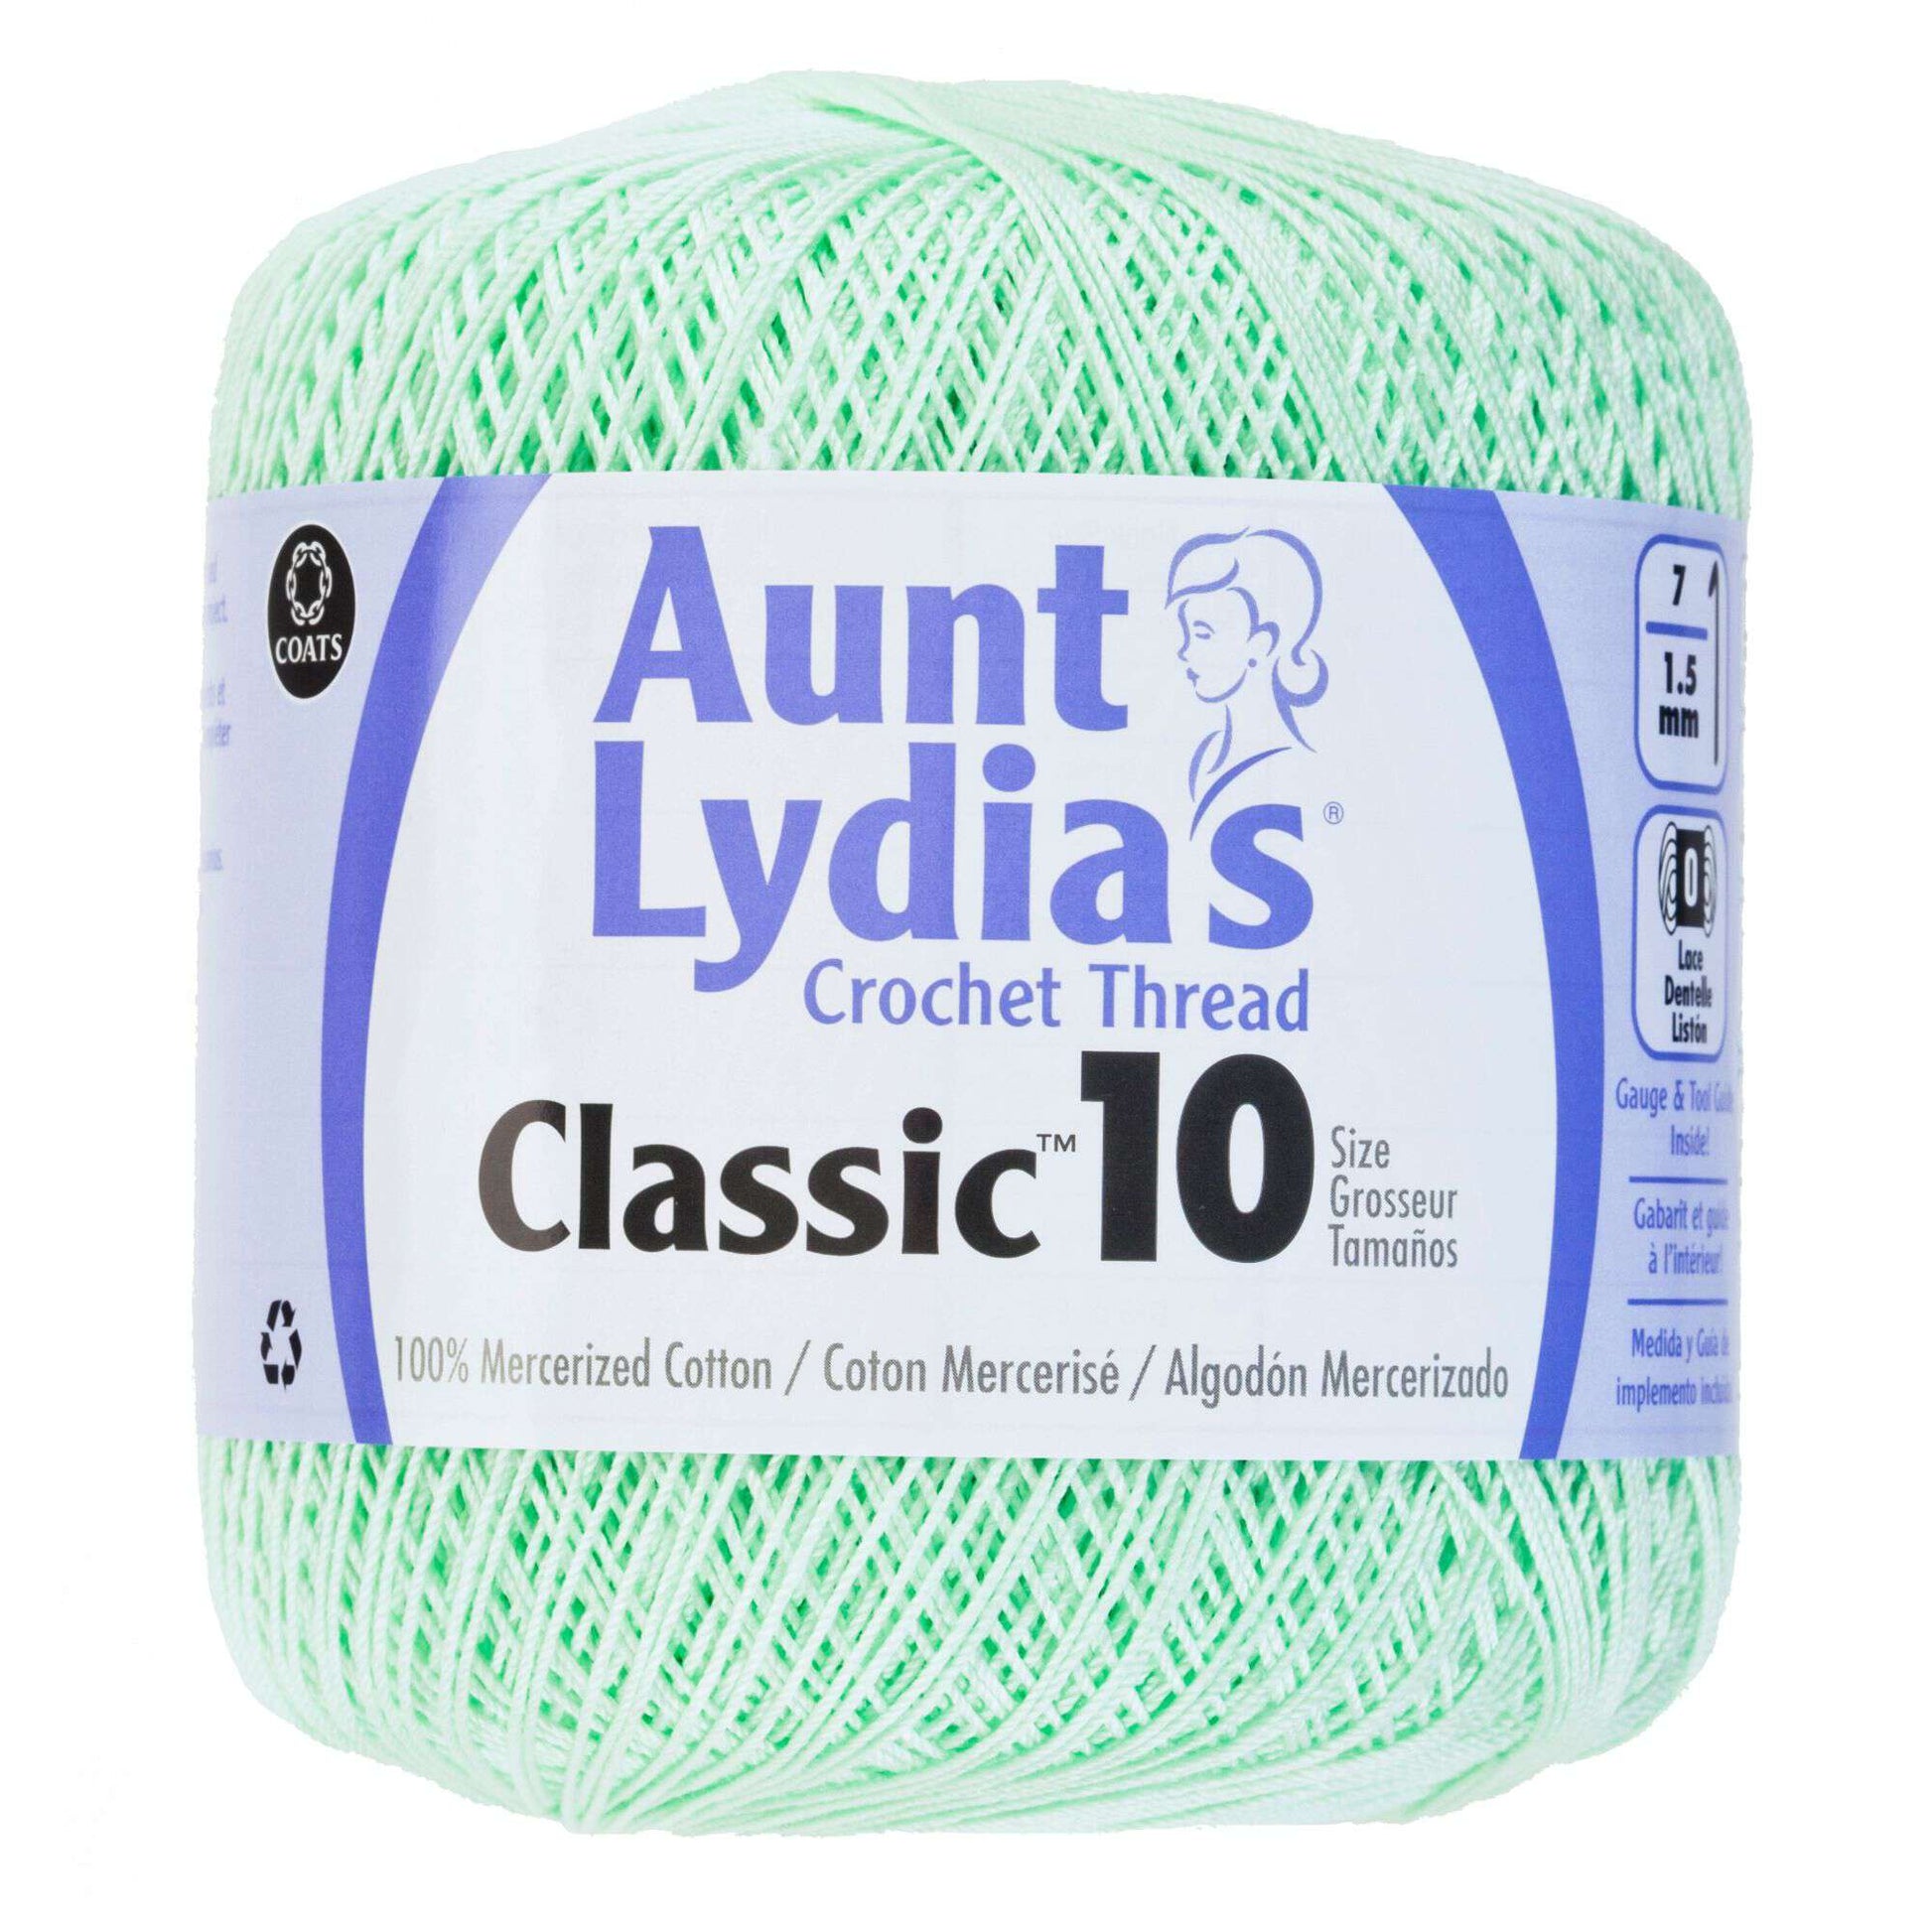 Aunt Lydia's Classic Crochet Thread Size 10 Mint Green